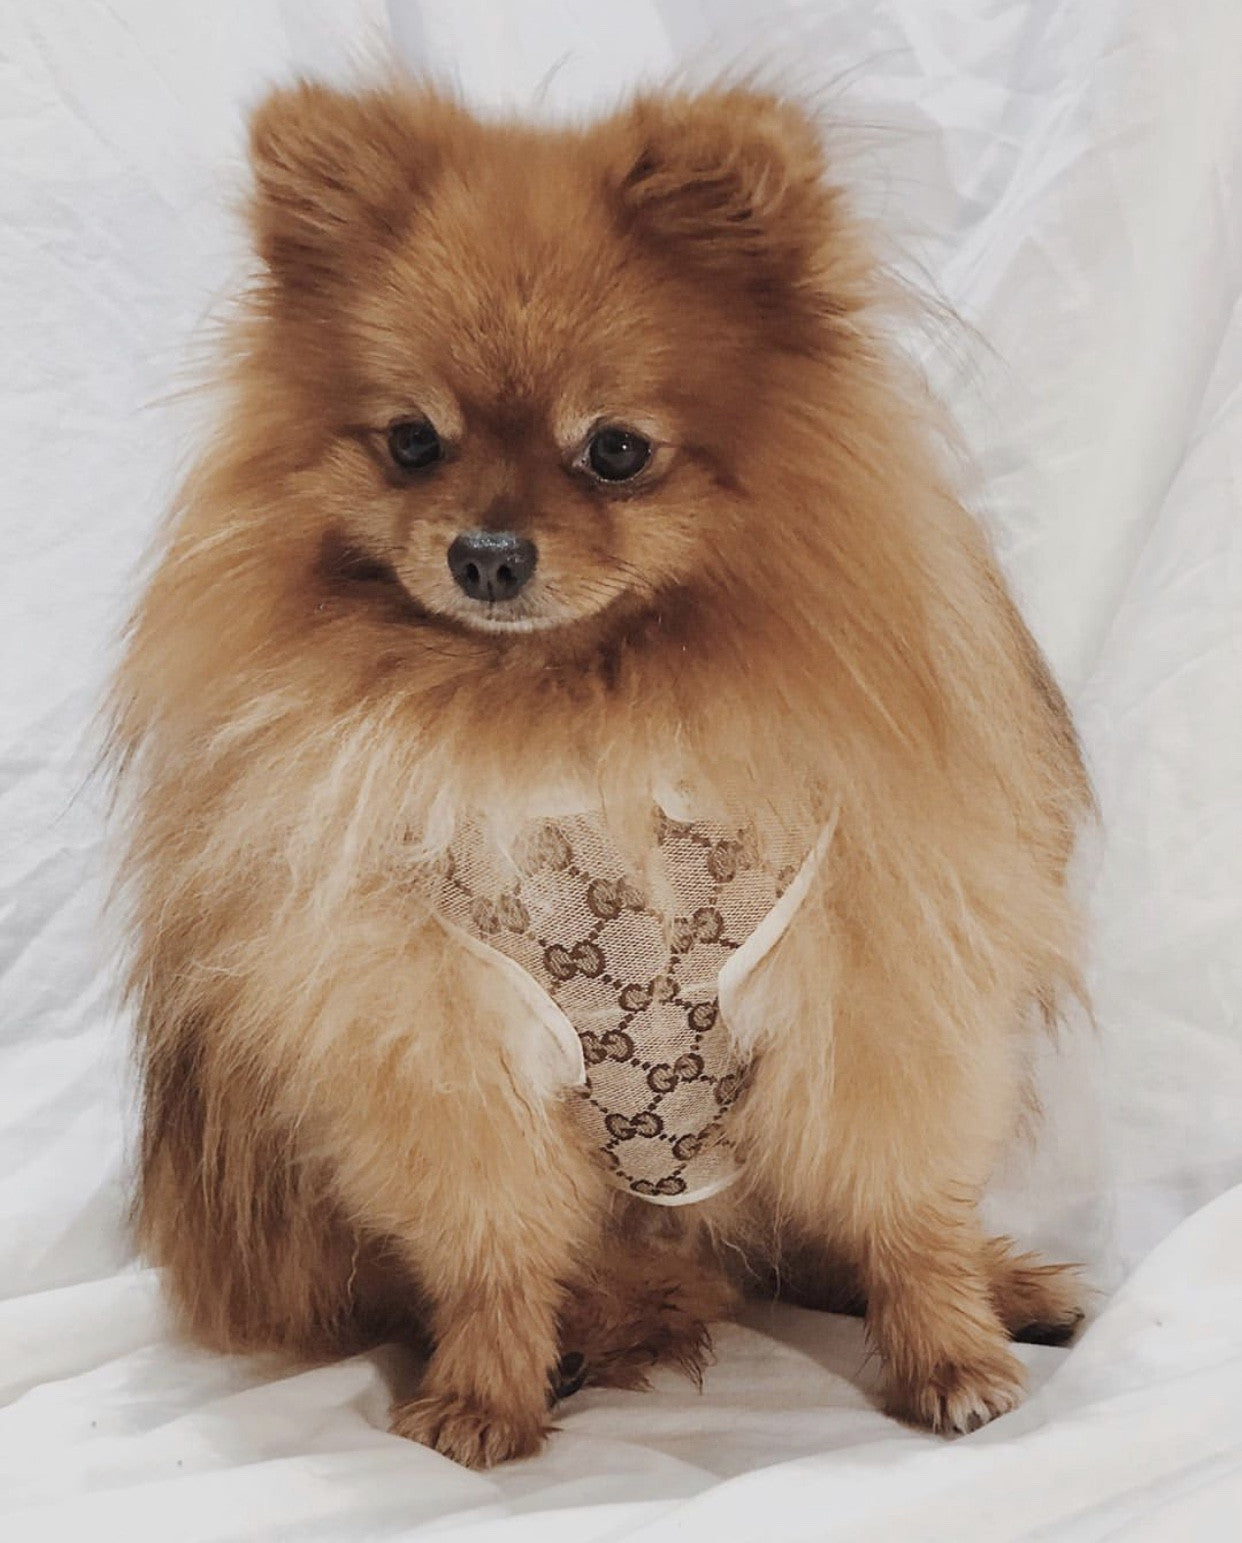 Gucci dog harness collar 42.5 to 47.5 cm